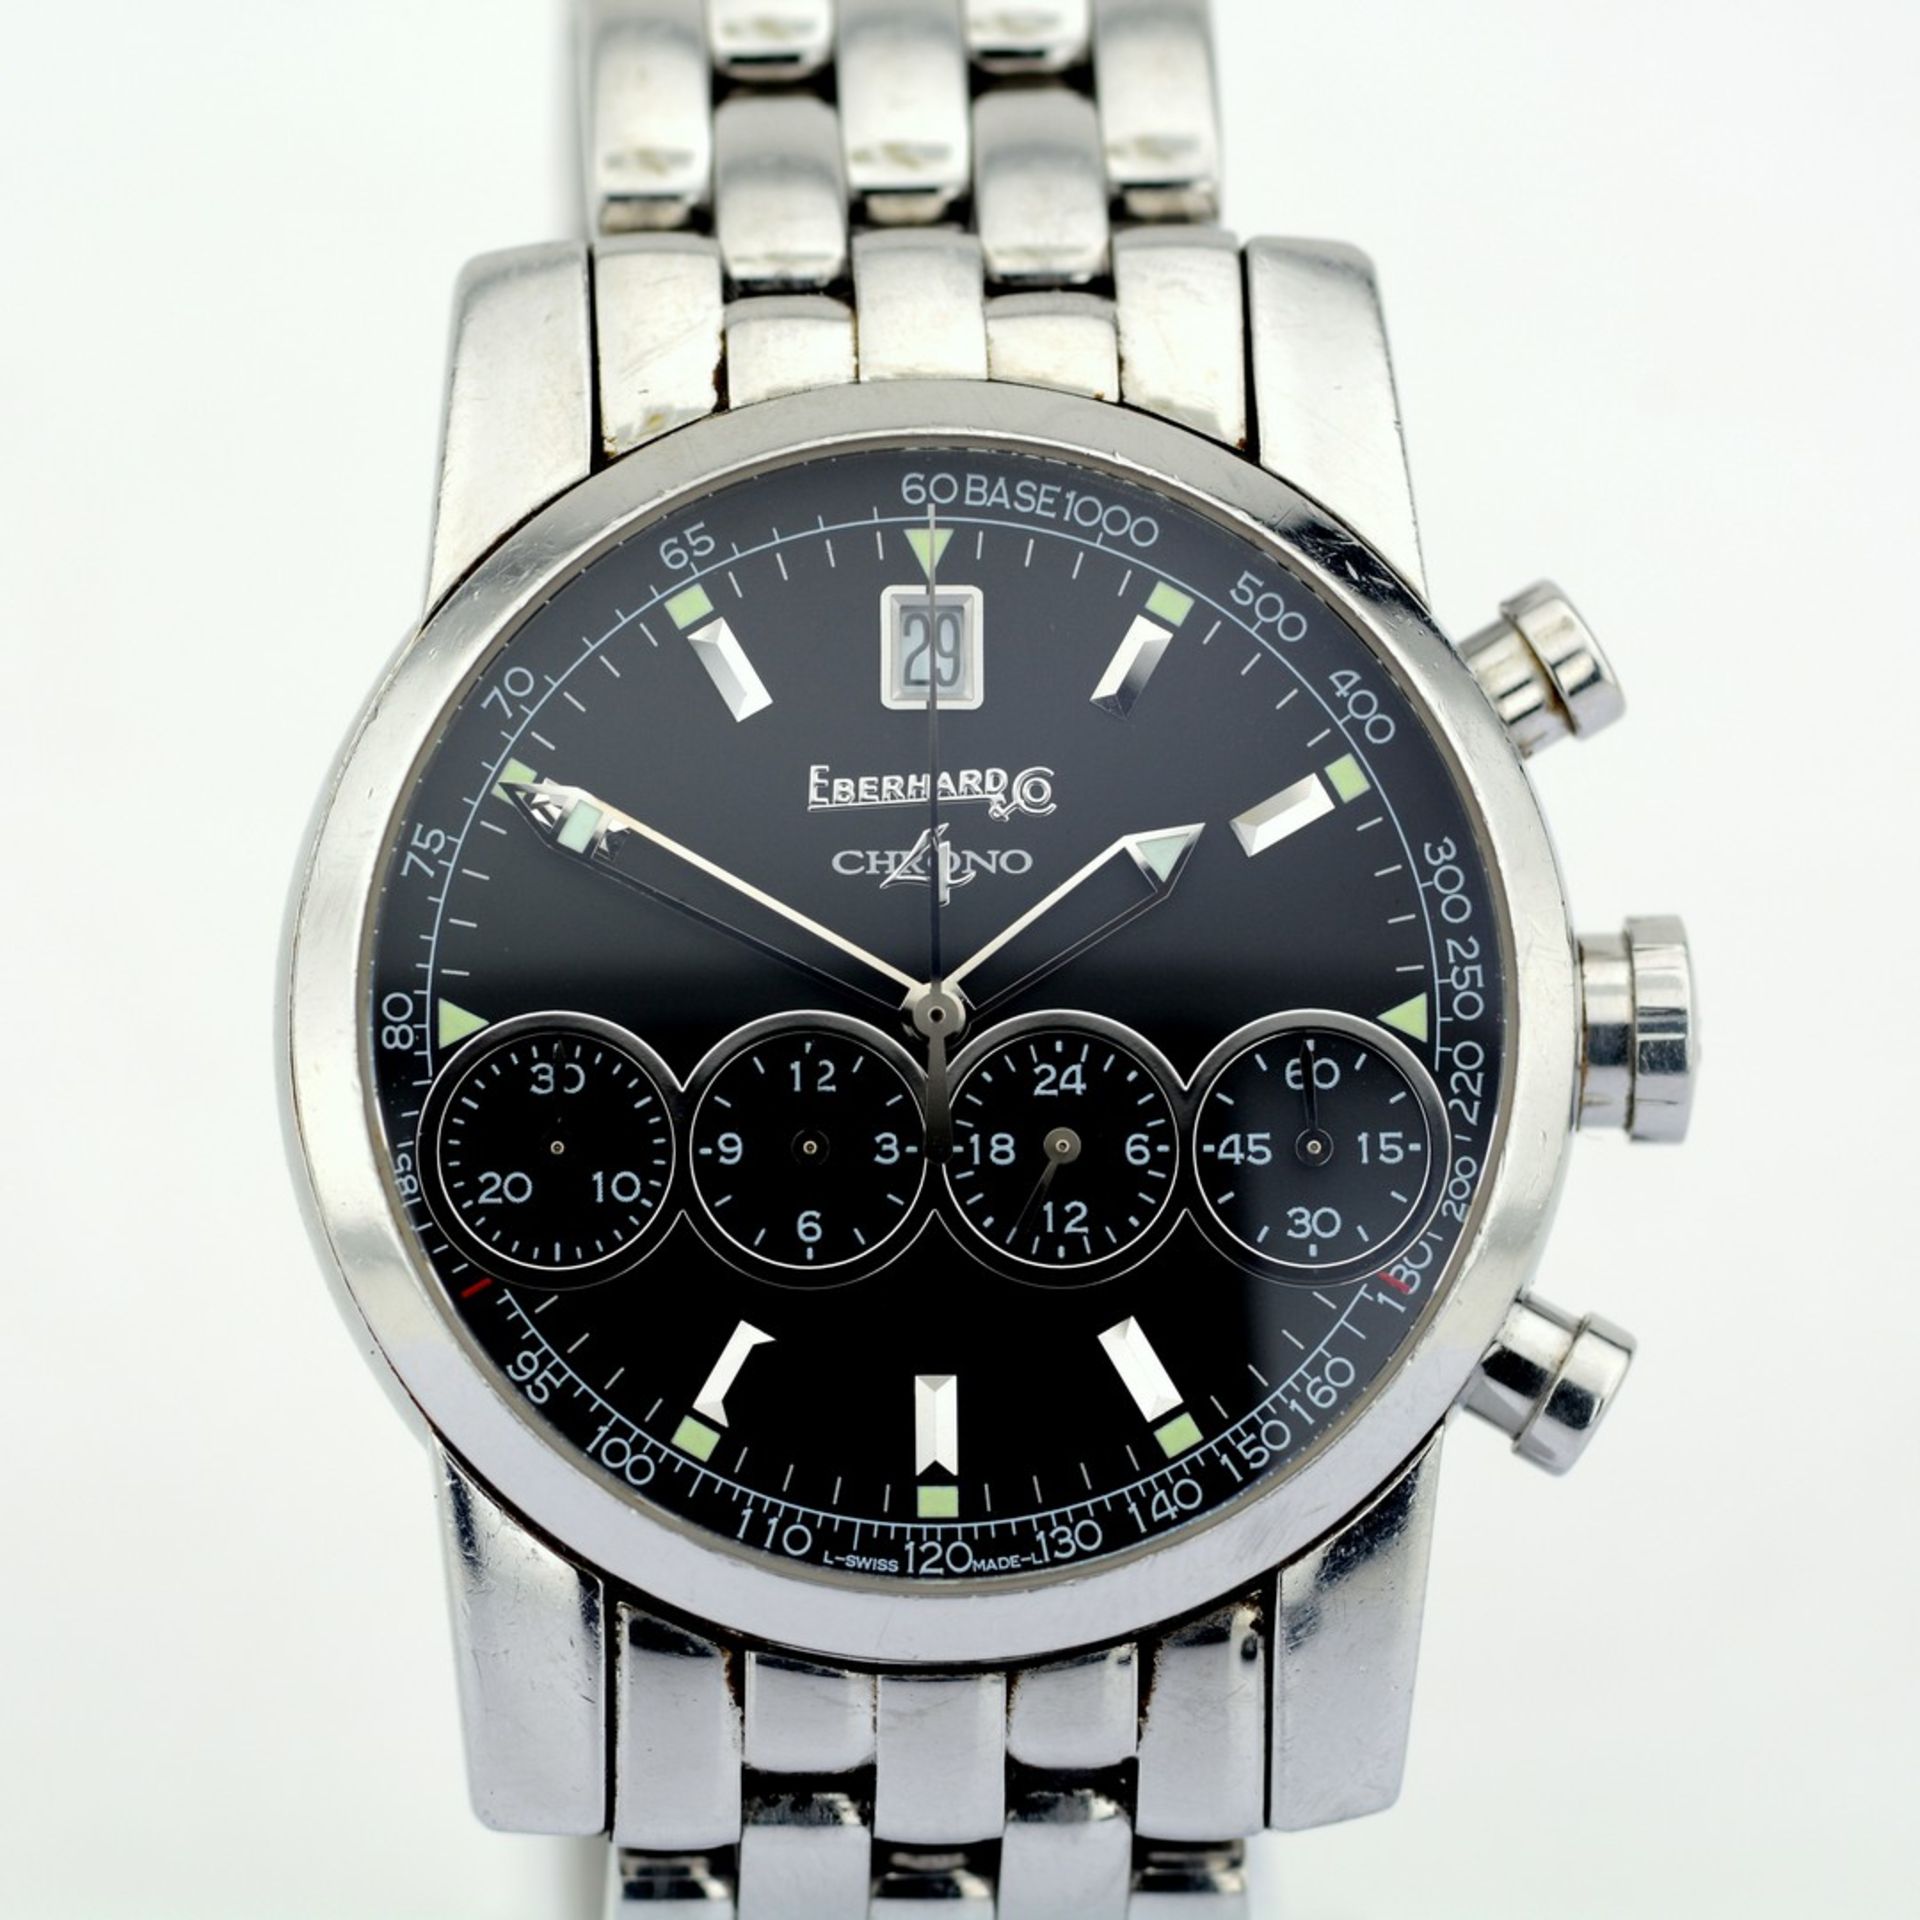 Eberhard & Co. / Chrono 4 Chronograph Automatic -Date - Gentlemen's Steel Wristwatch - Image 3 of 8